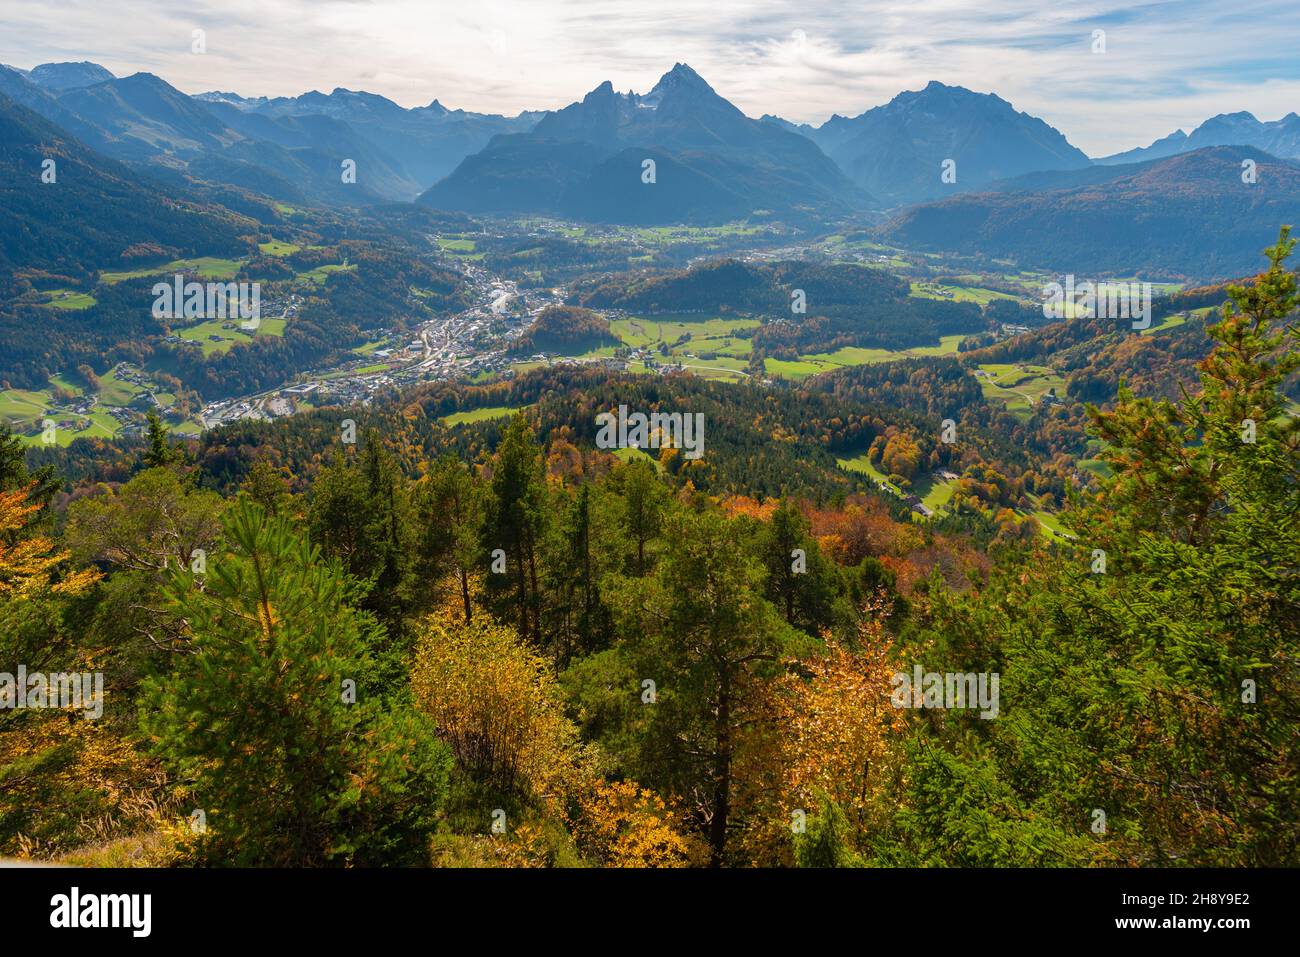 Montagna di Watchmann e Berchtesgaden visto dal Monte Kneifelspitz, 1168 m s.l.m. Maria Gern, Berchtesgaden, alta Baviera, Germania meridionale Foto Stock